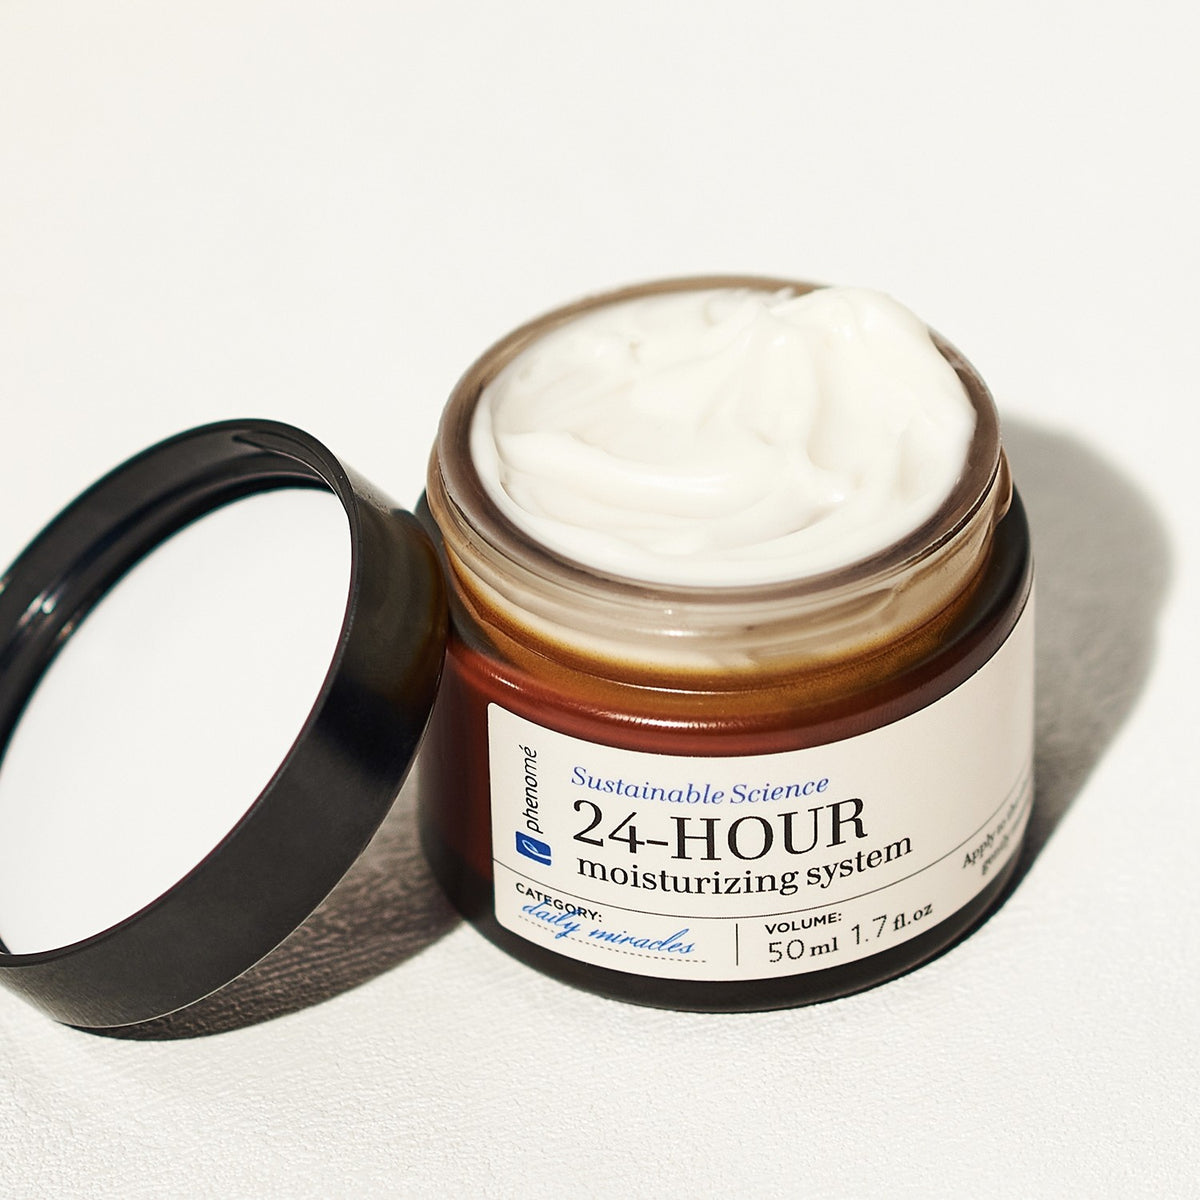 24-HOUR moisturizing system 50 ml